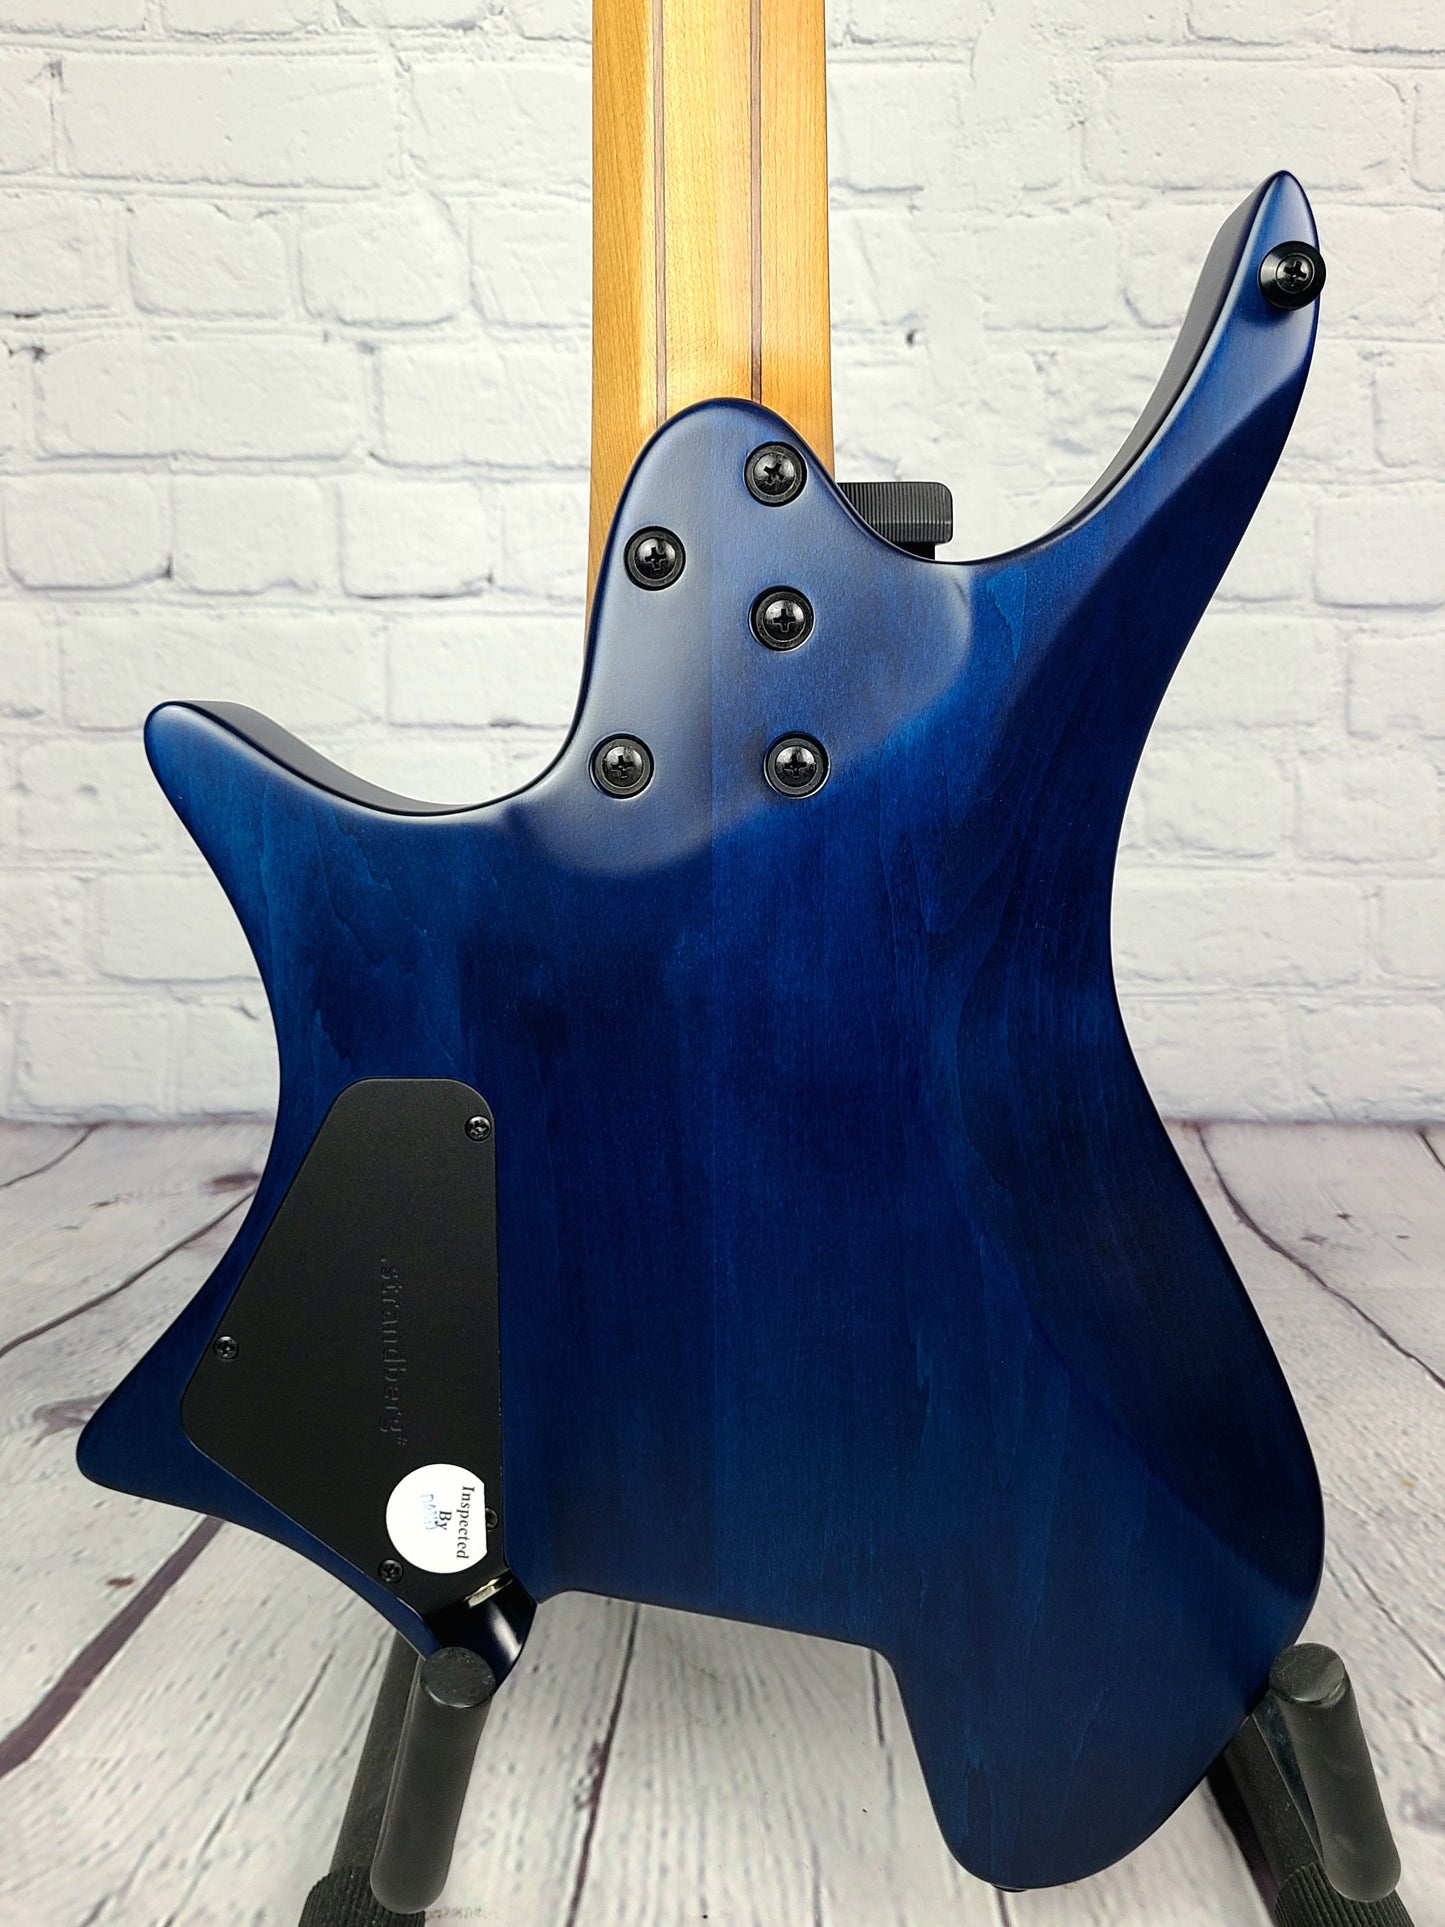 Strandberg Boden Standard 7 String Flame Maple Trans Blue Electric Guitar